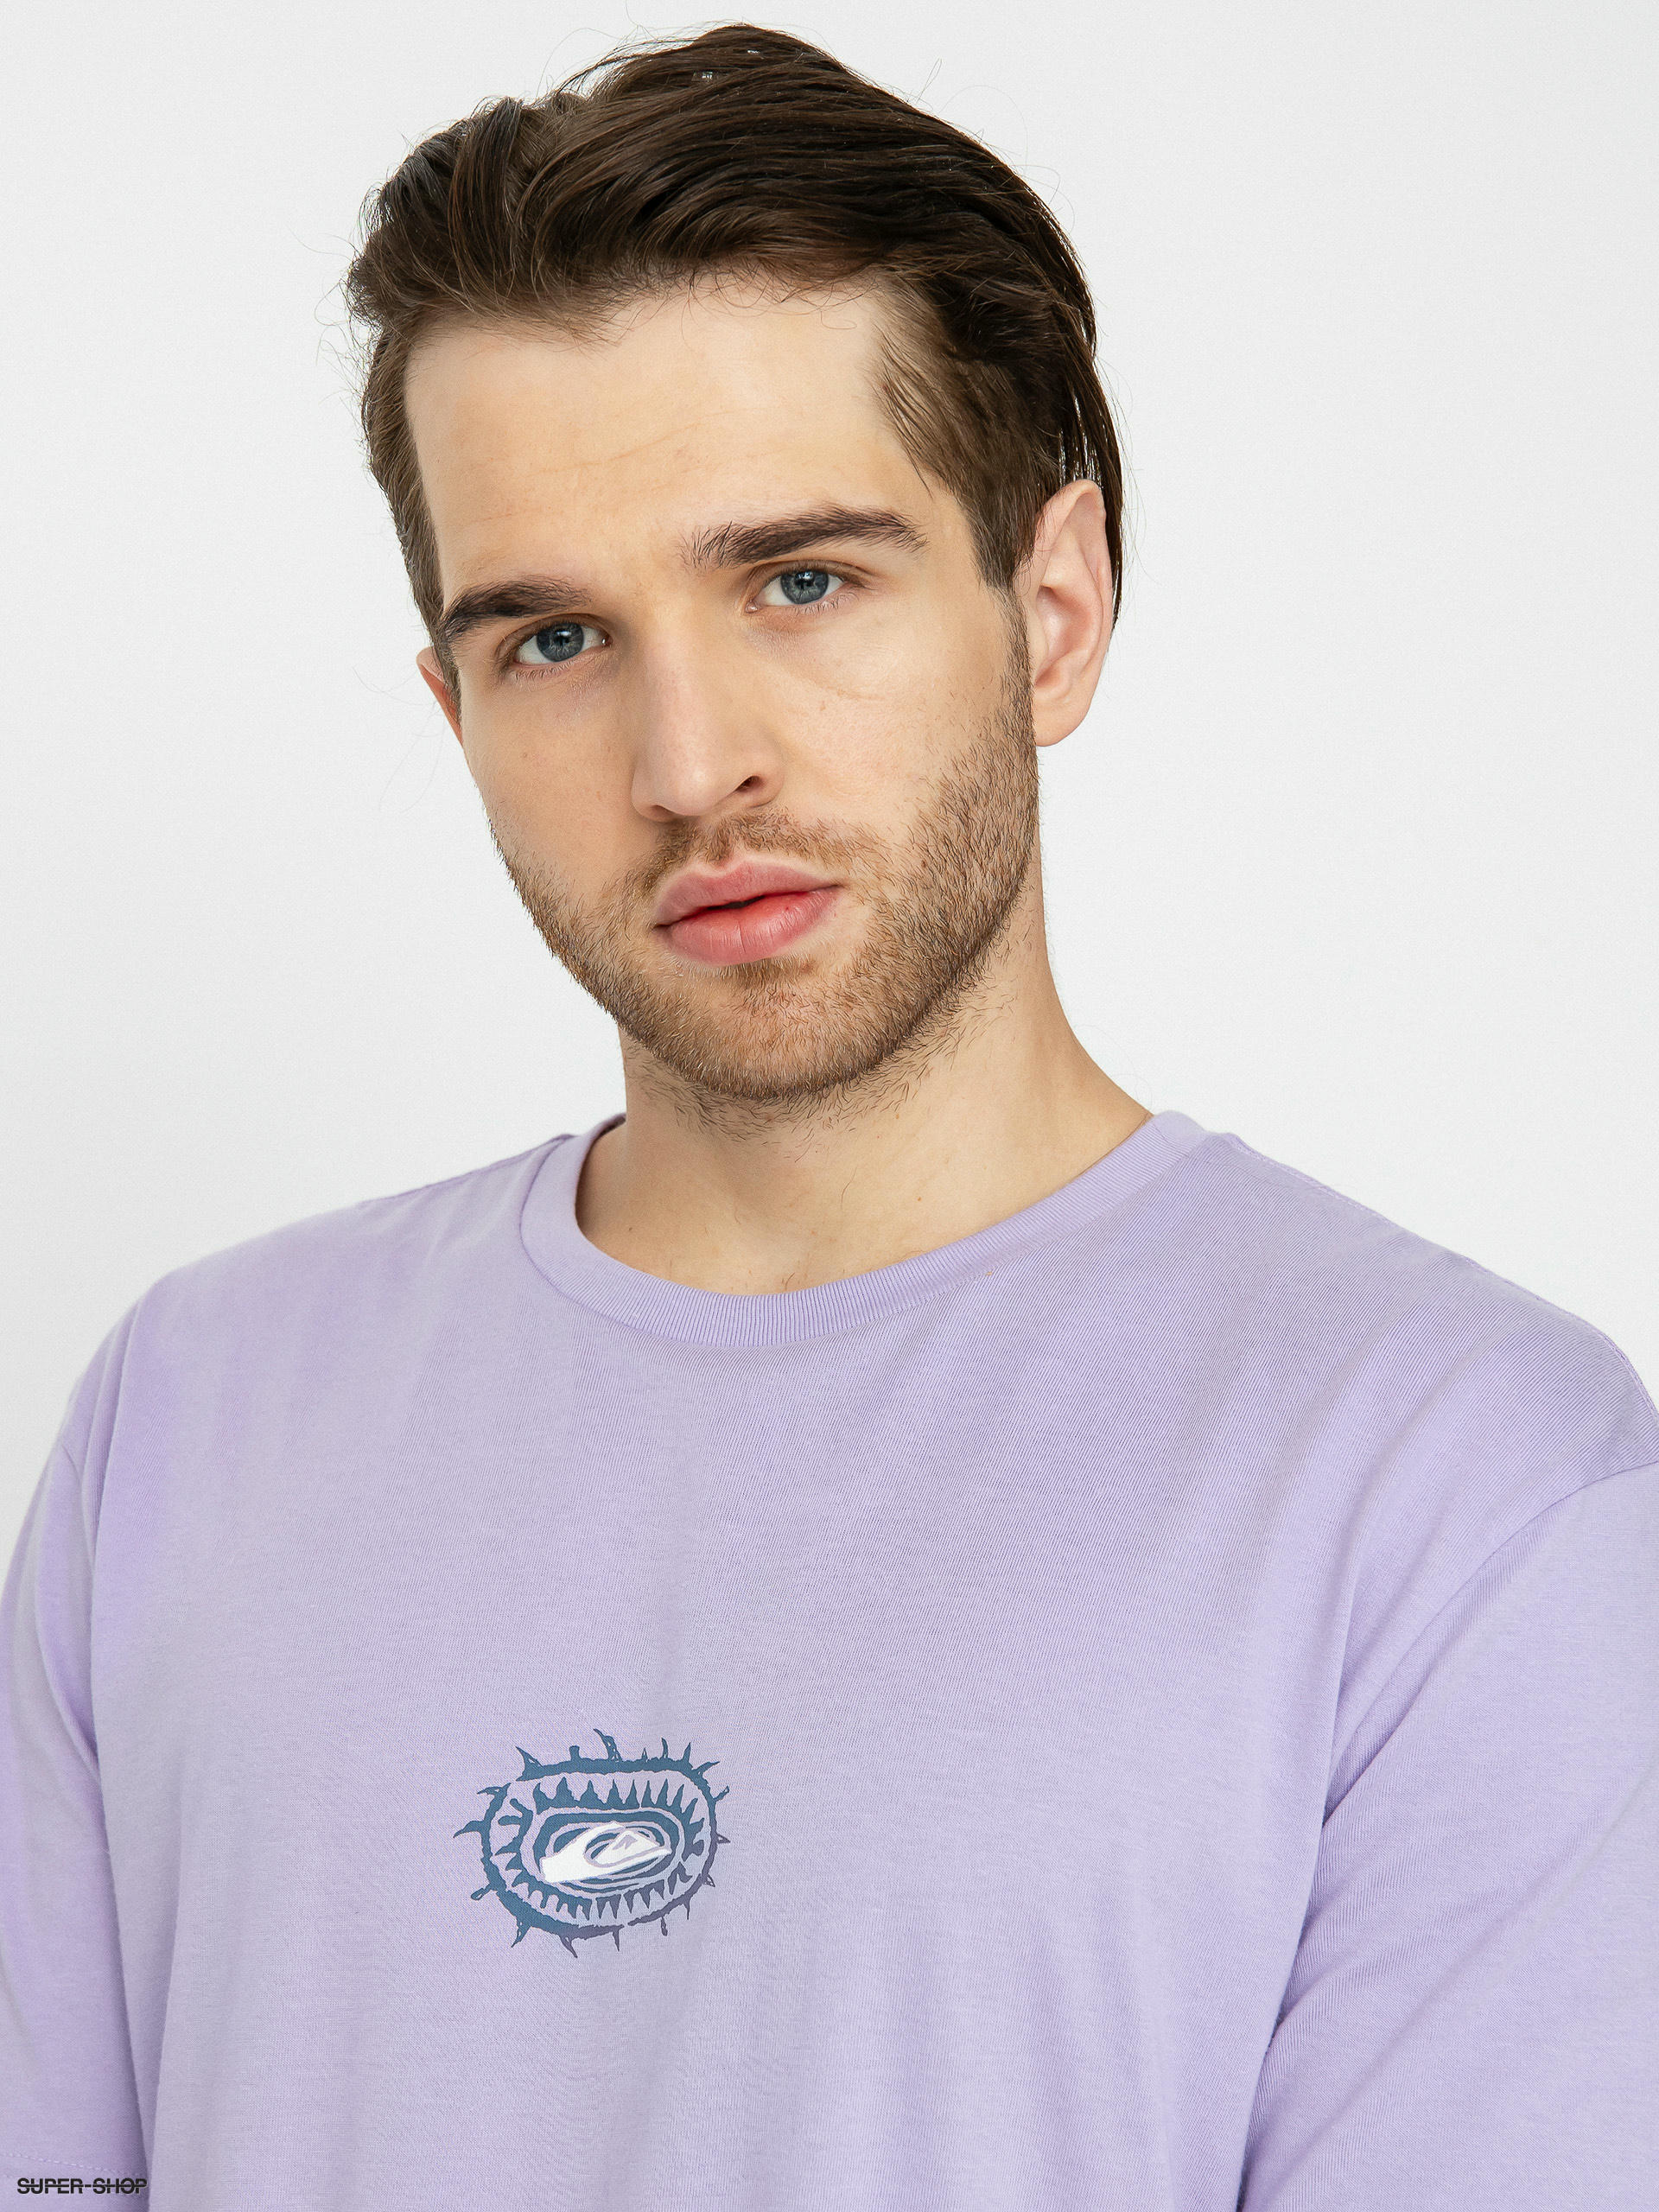 T-shirt rose) Urban Surfin Quiksilver (purple